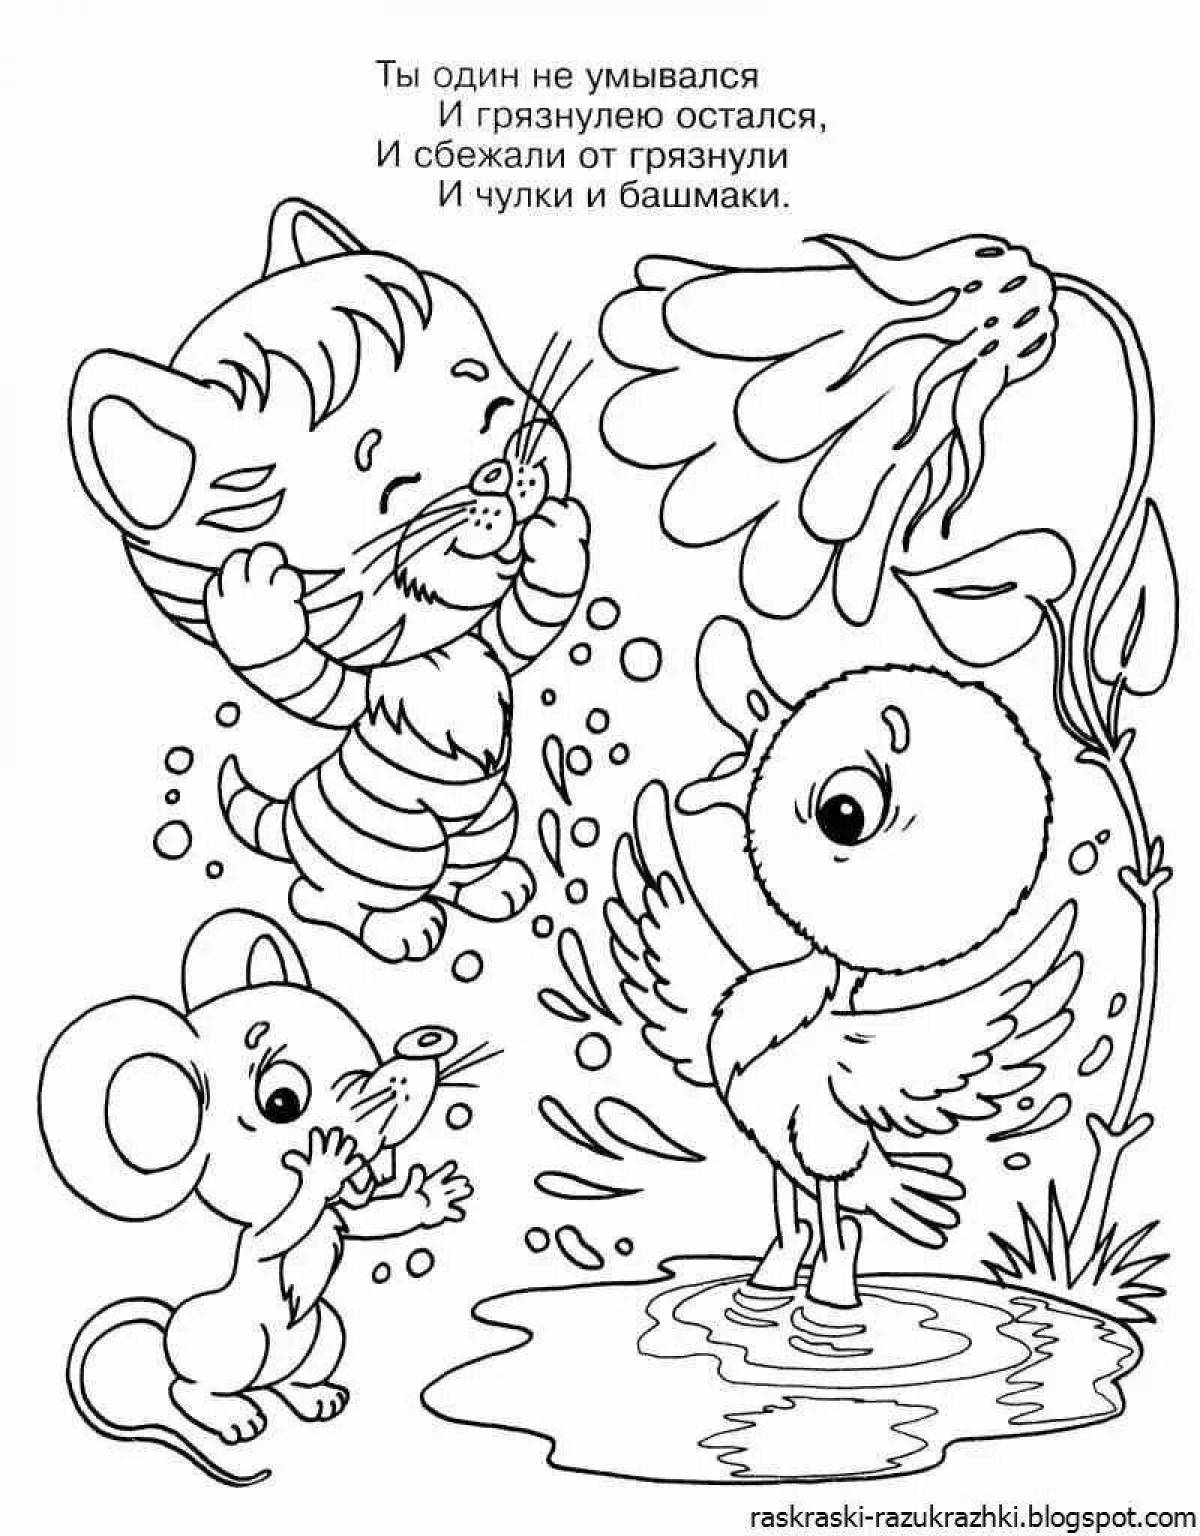 Wonderful Chukovsky coloring book